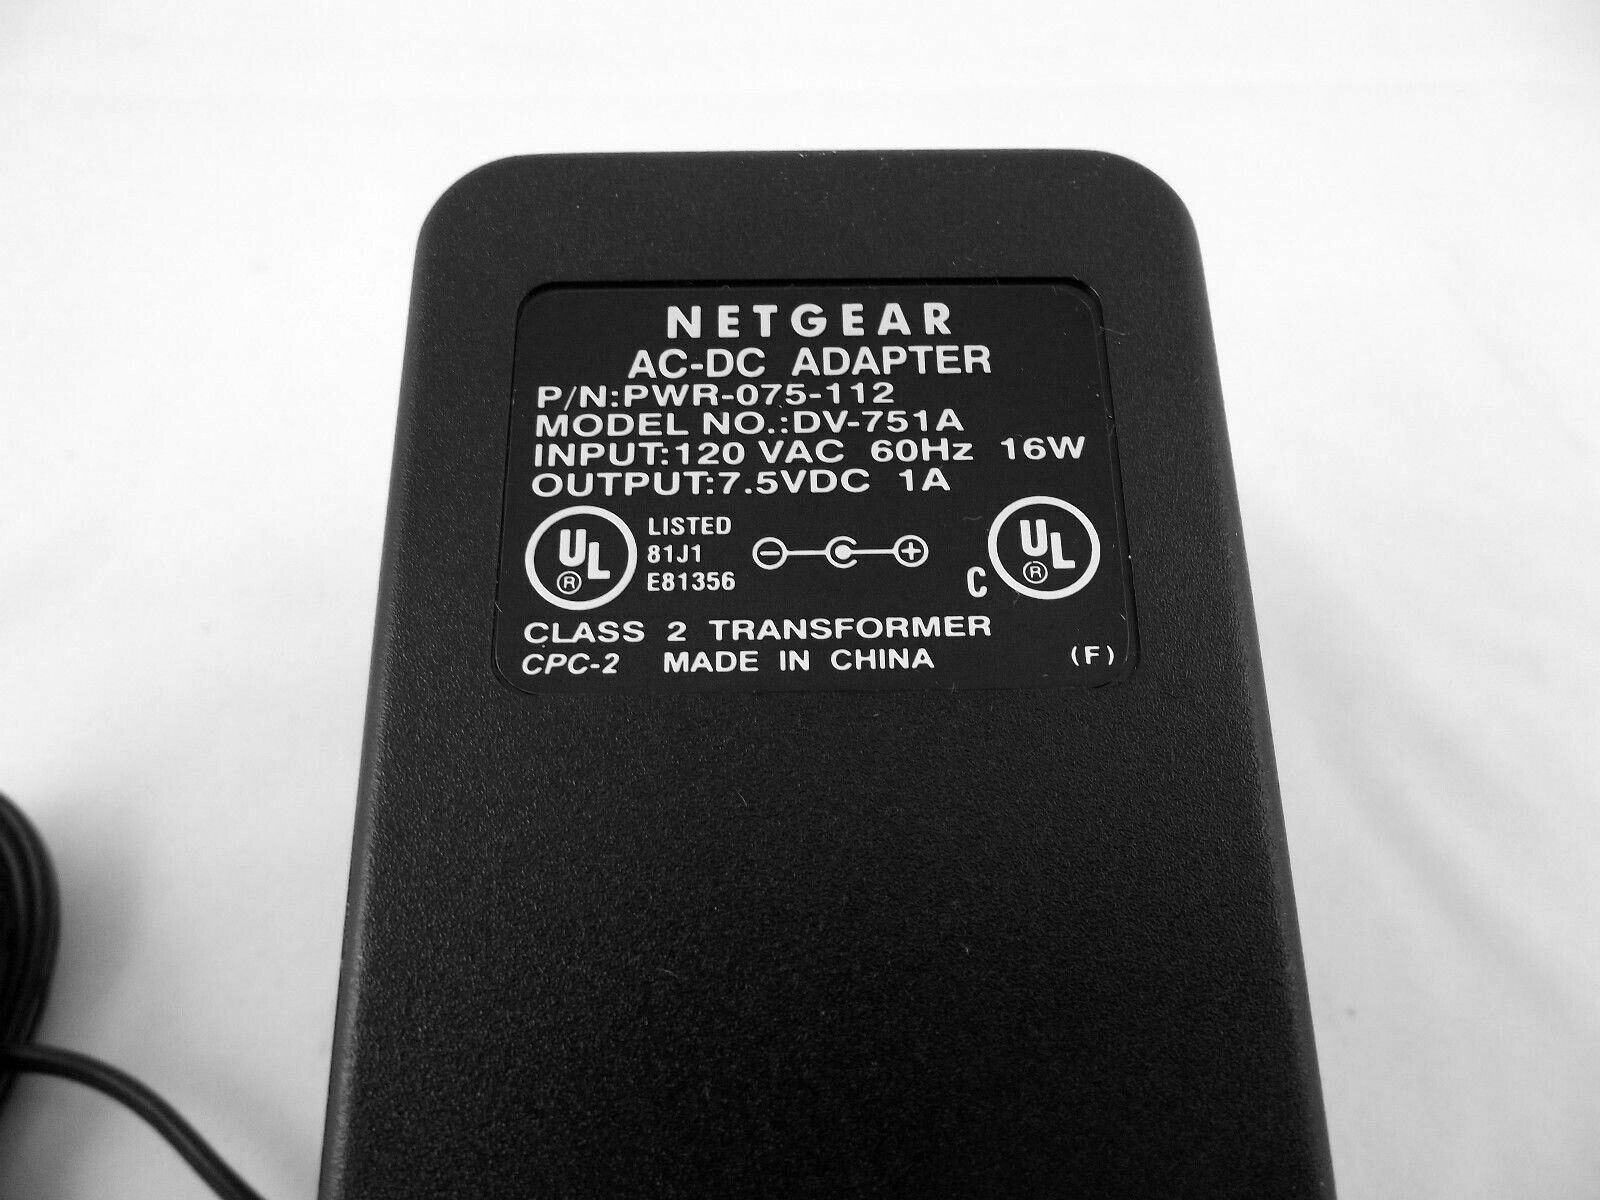 Netgear PWR-075-112 7.5V 1A AC/DC Adapter DV-751A